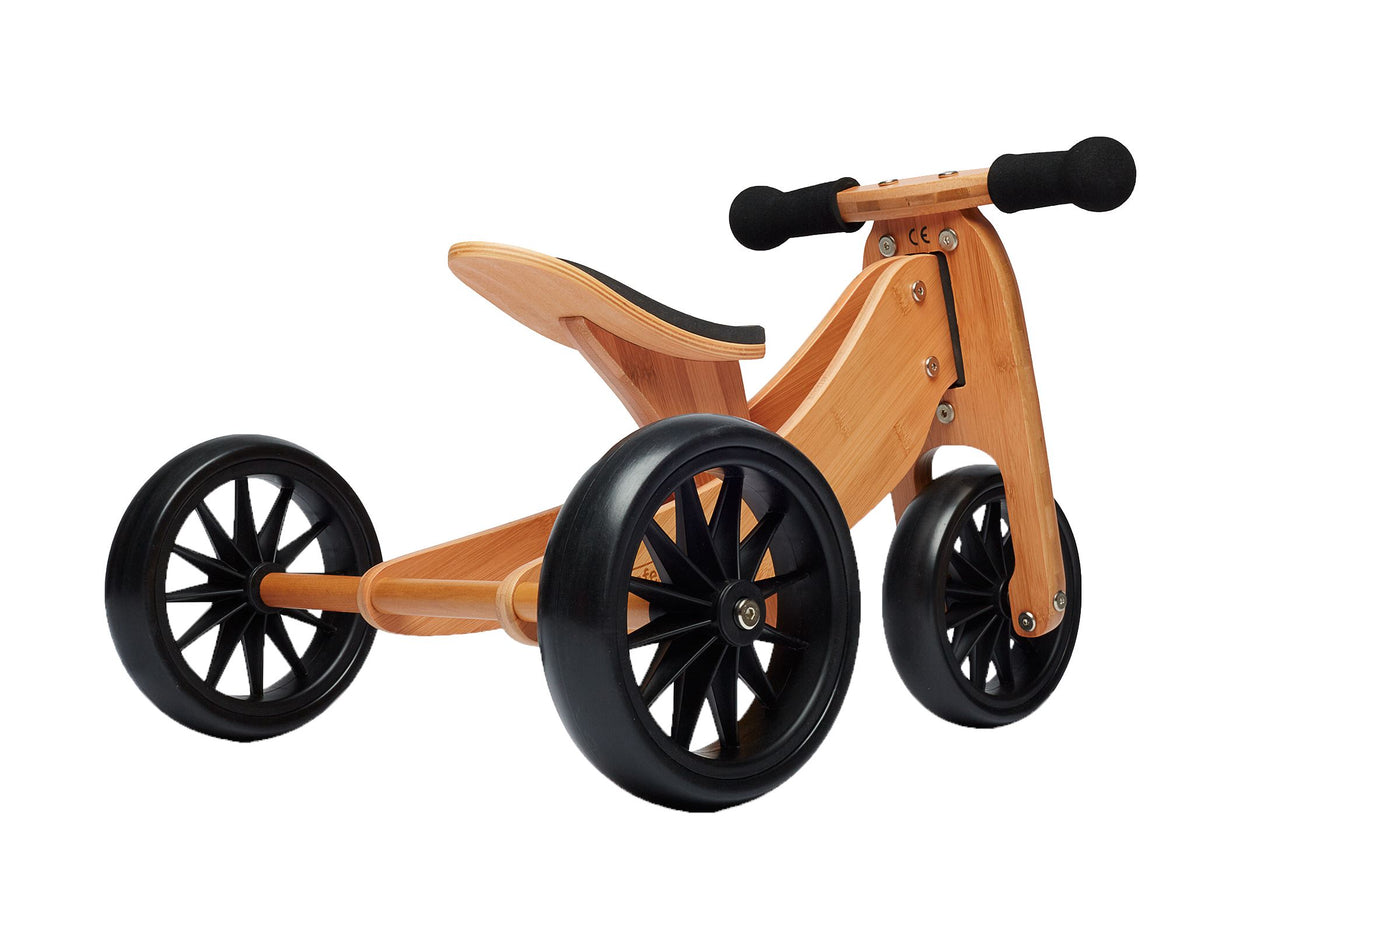 Tiny Tot Trike - Bamboo Bike Kinderfeets 